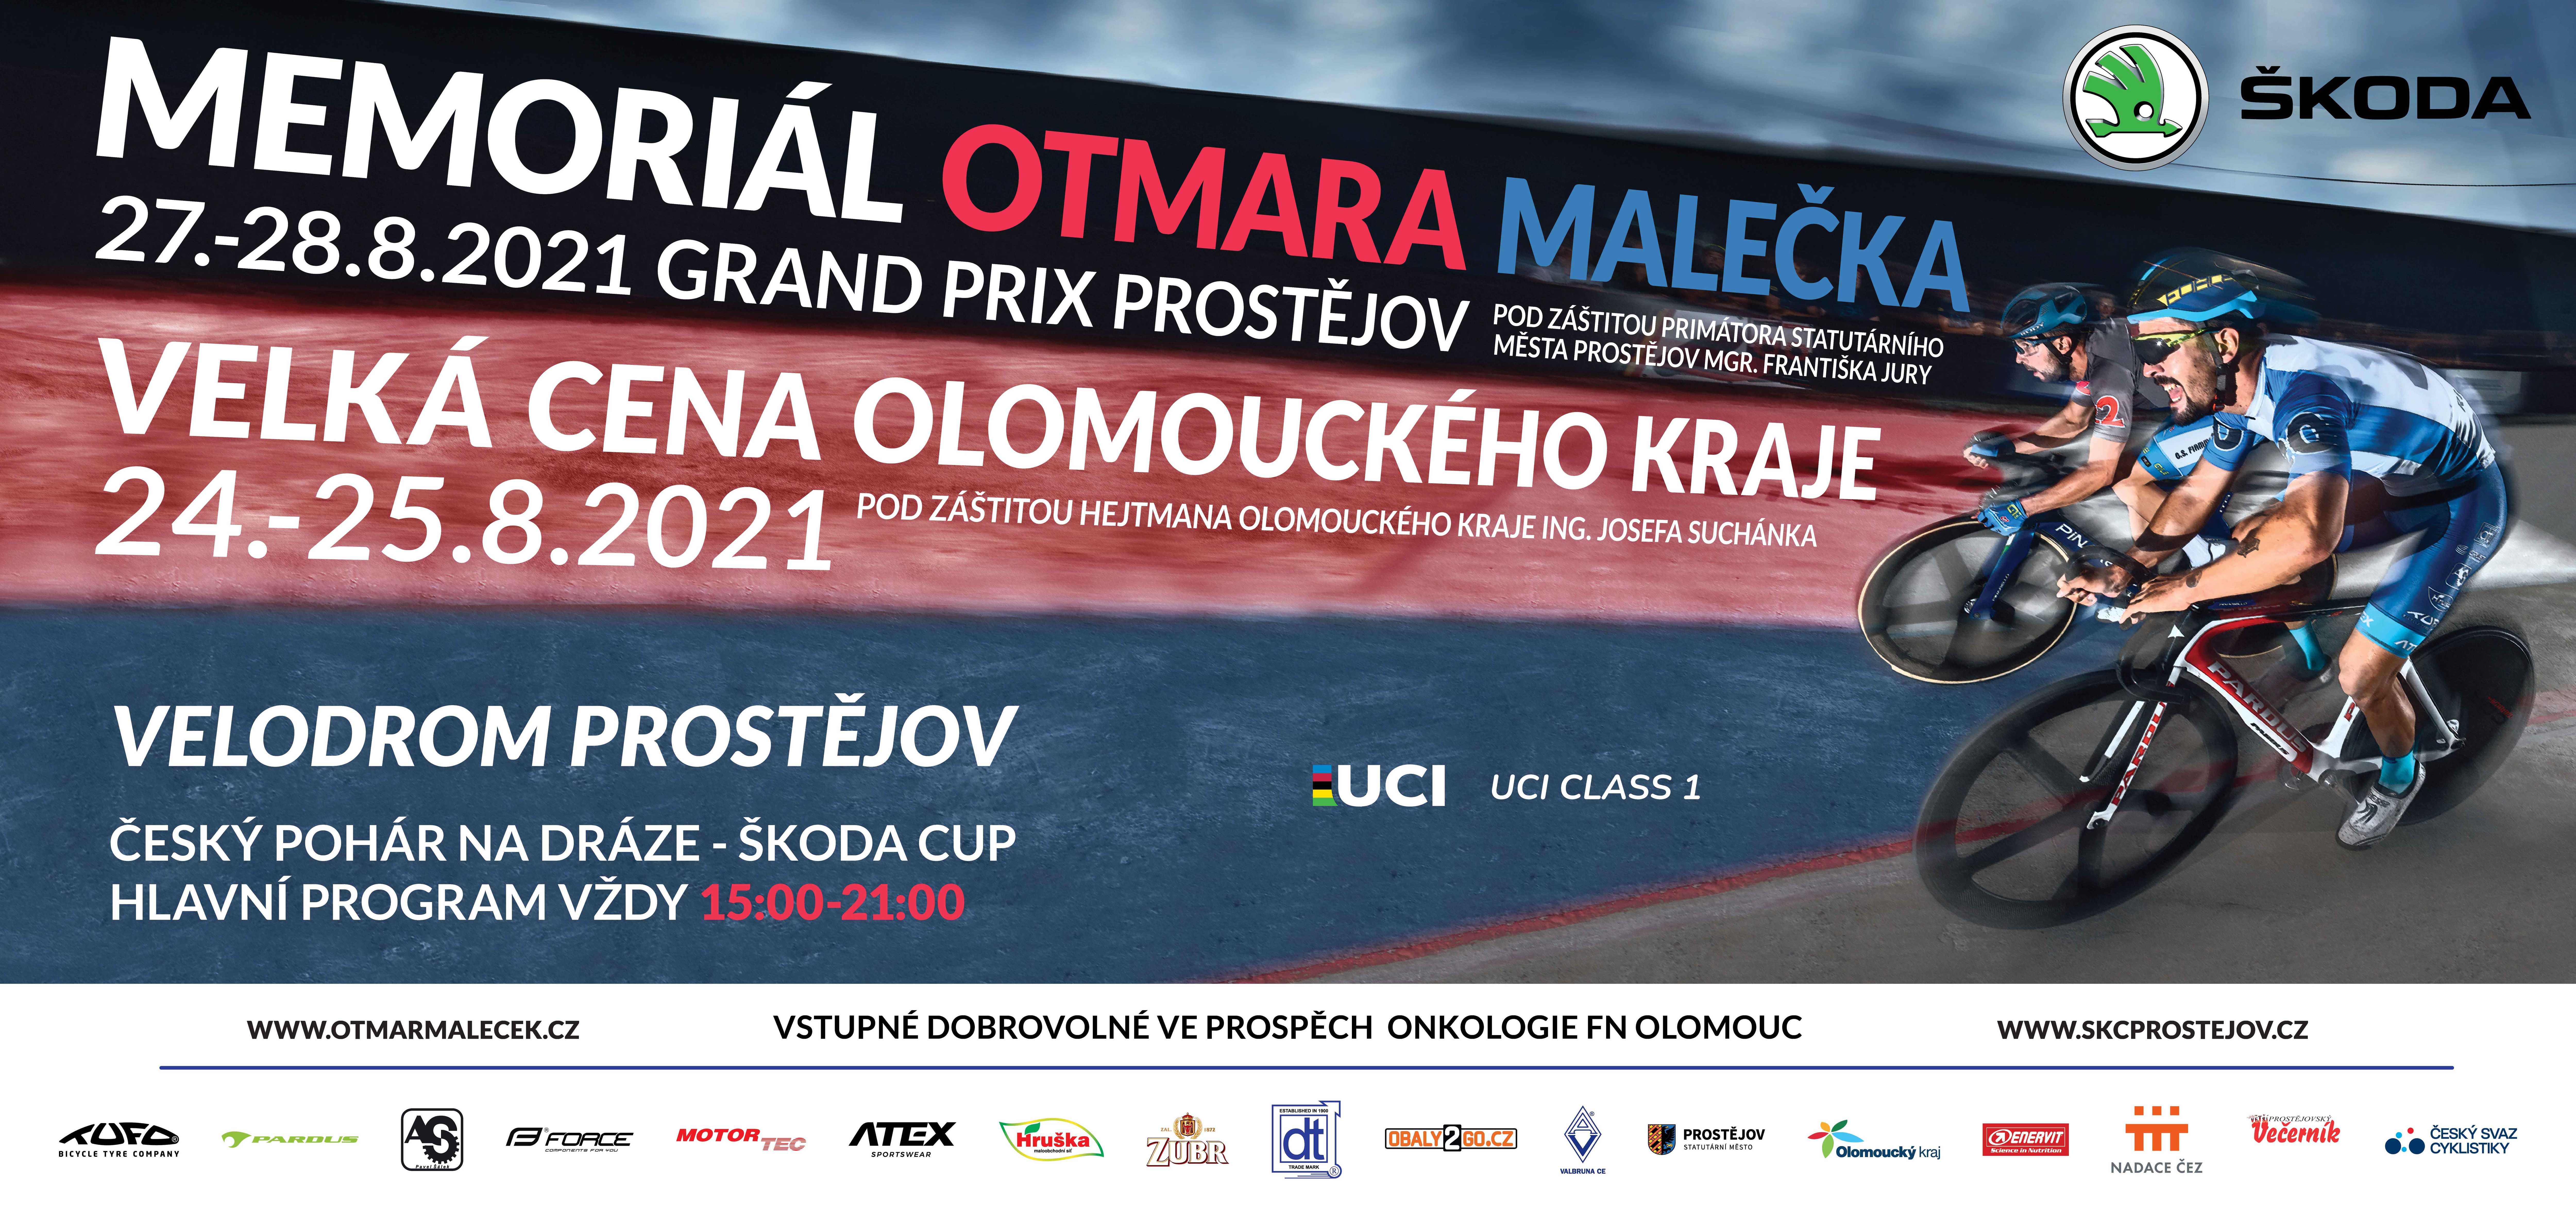 GP Prostějov - Memoriál Otmara Malečka 2021